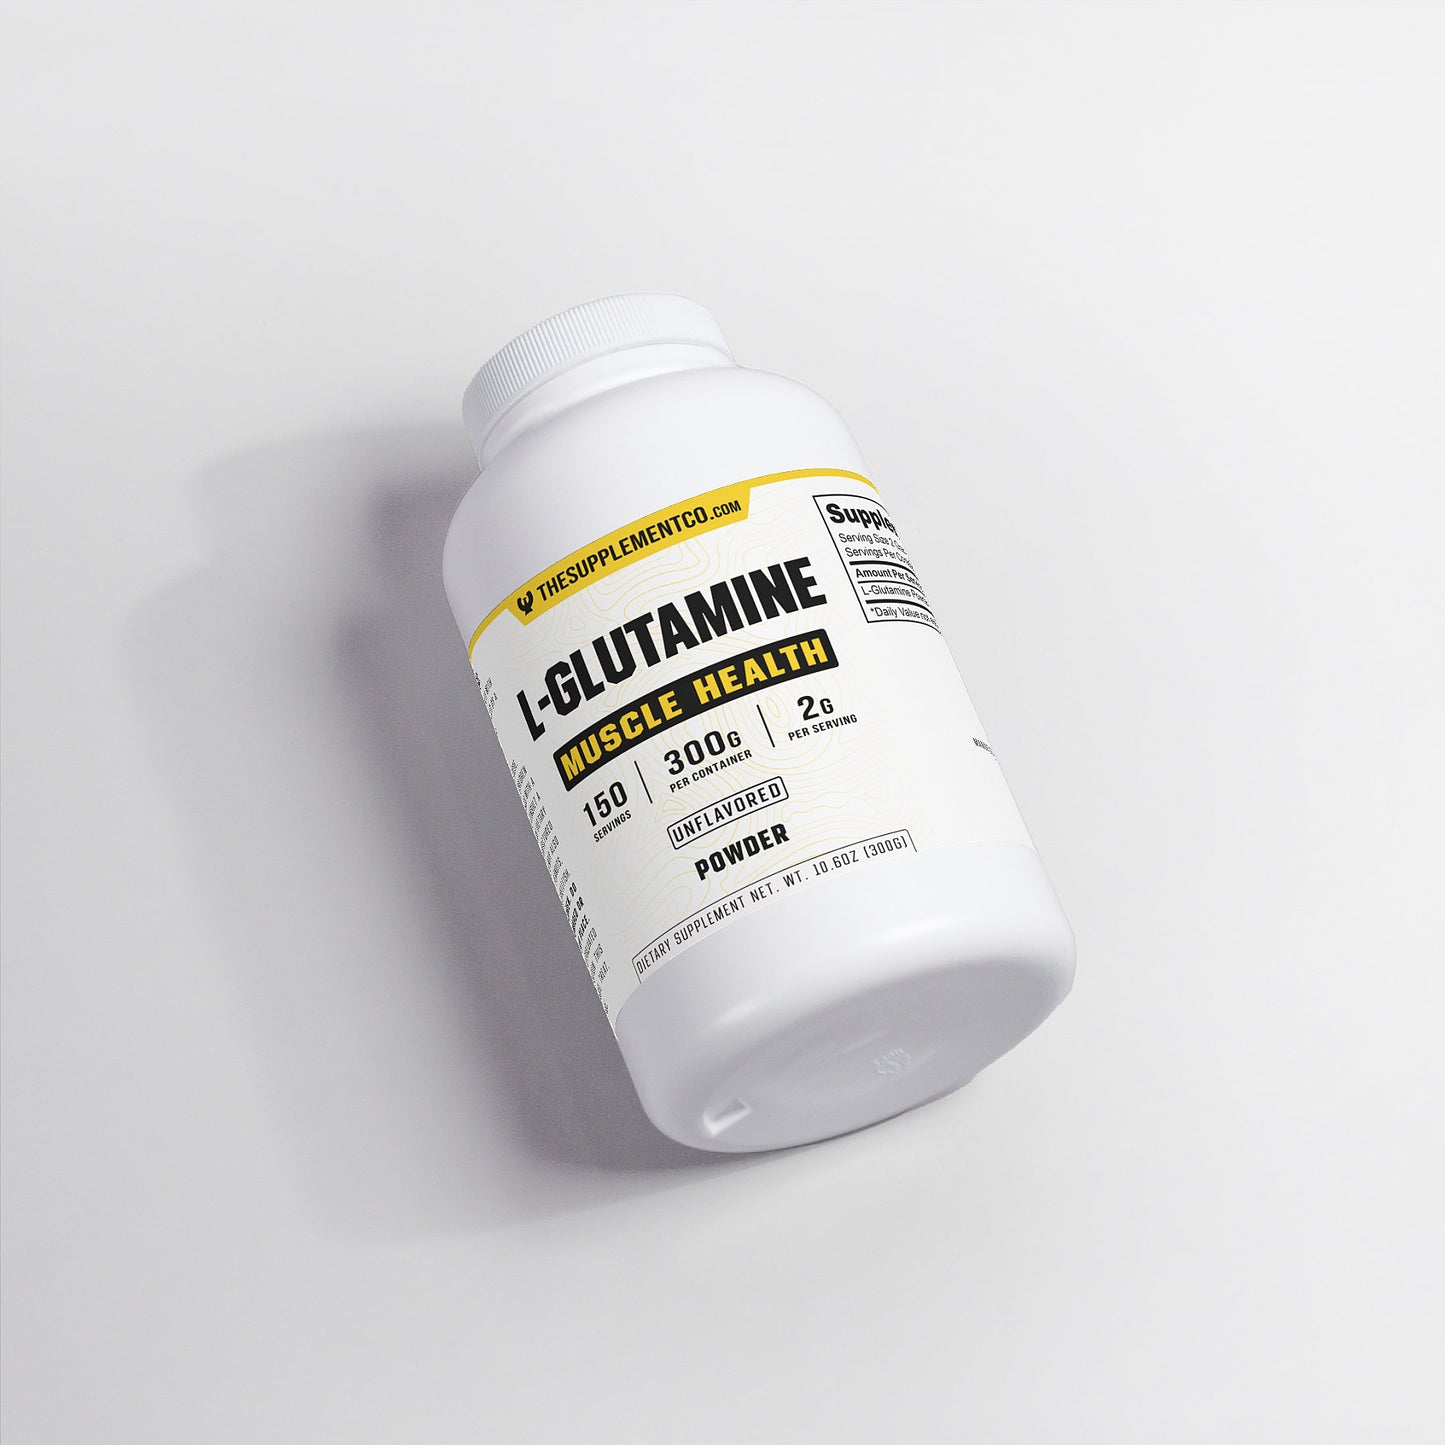 
                  
                    L-Glutamine Powder
                  
                